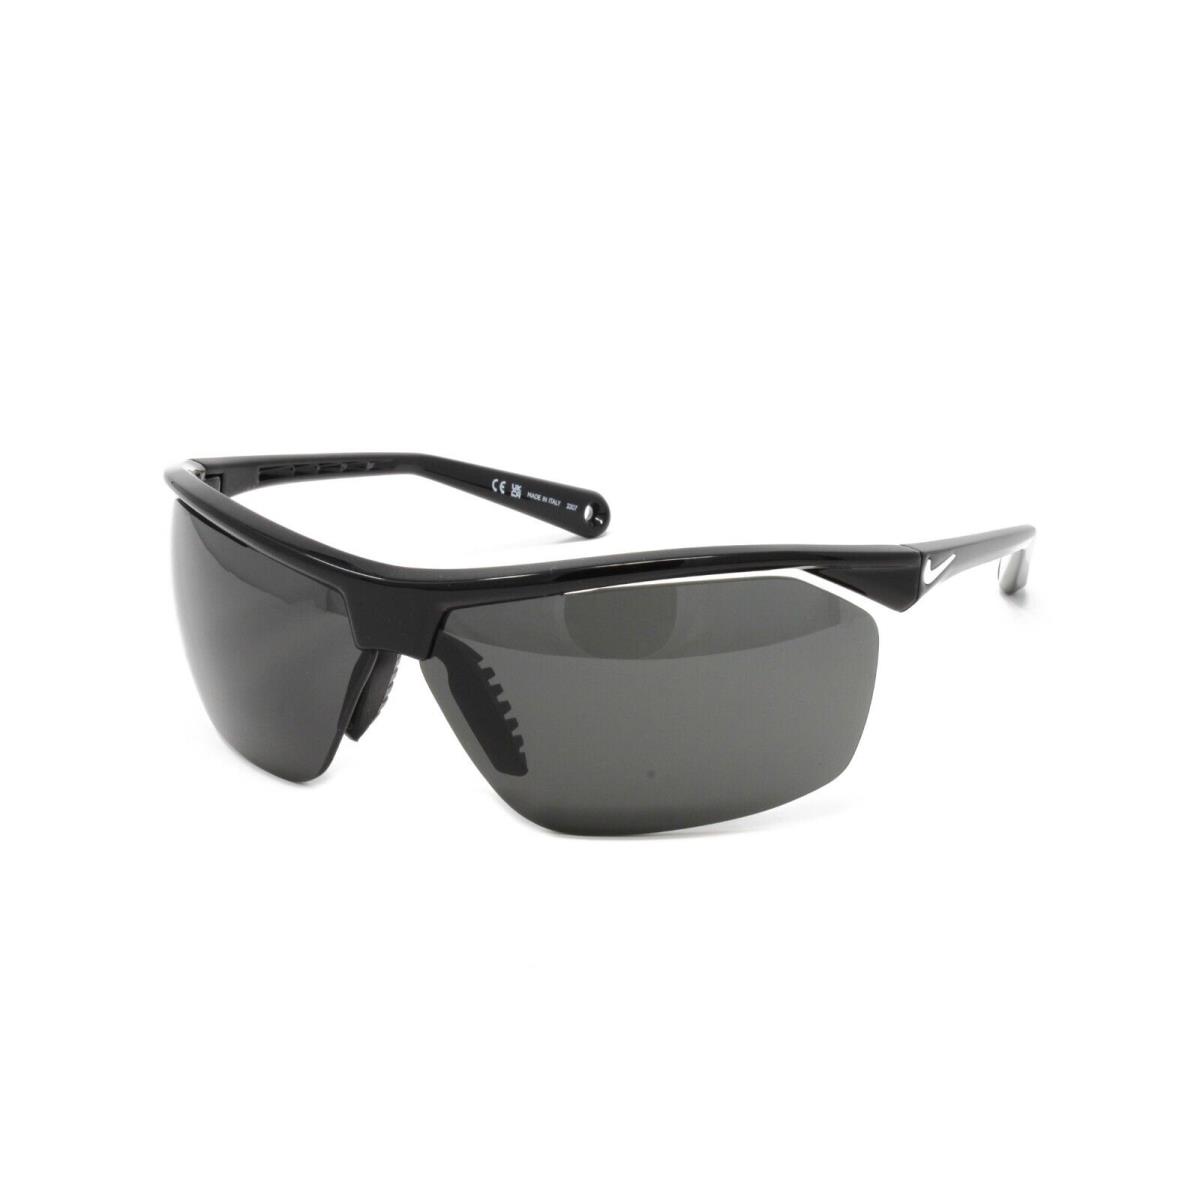 Nike Sunglasses Tailwind 12 EV1128 001 Shiny Black White 70mm Gray Lens - Frame: Black, Lens: Gray